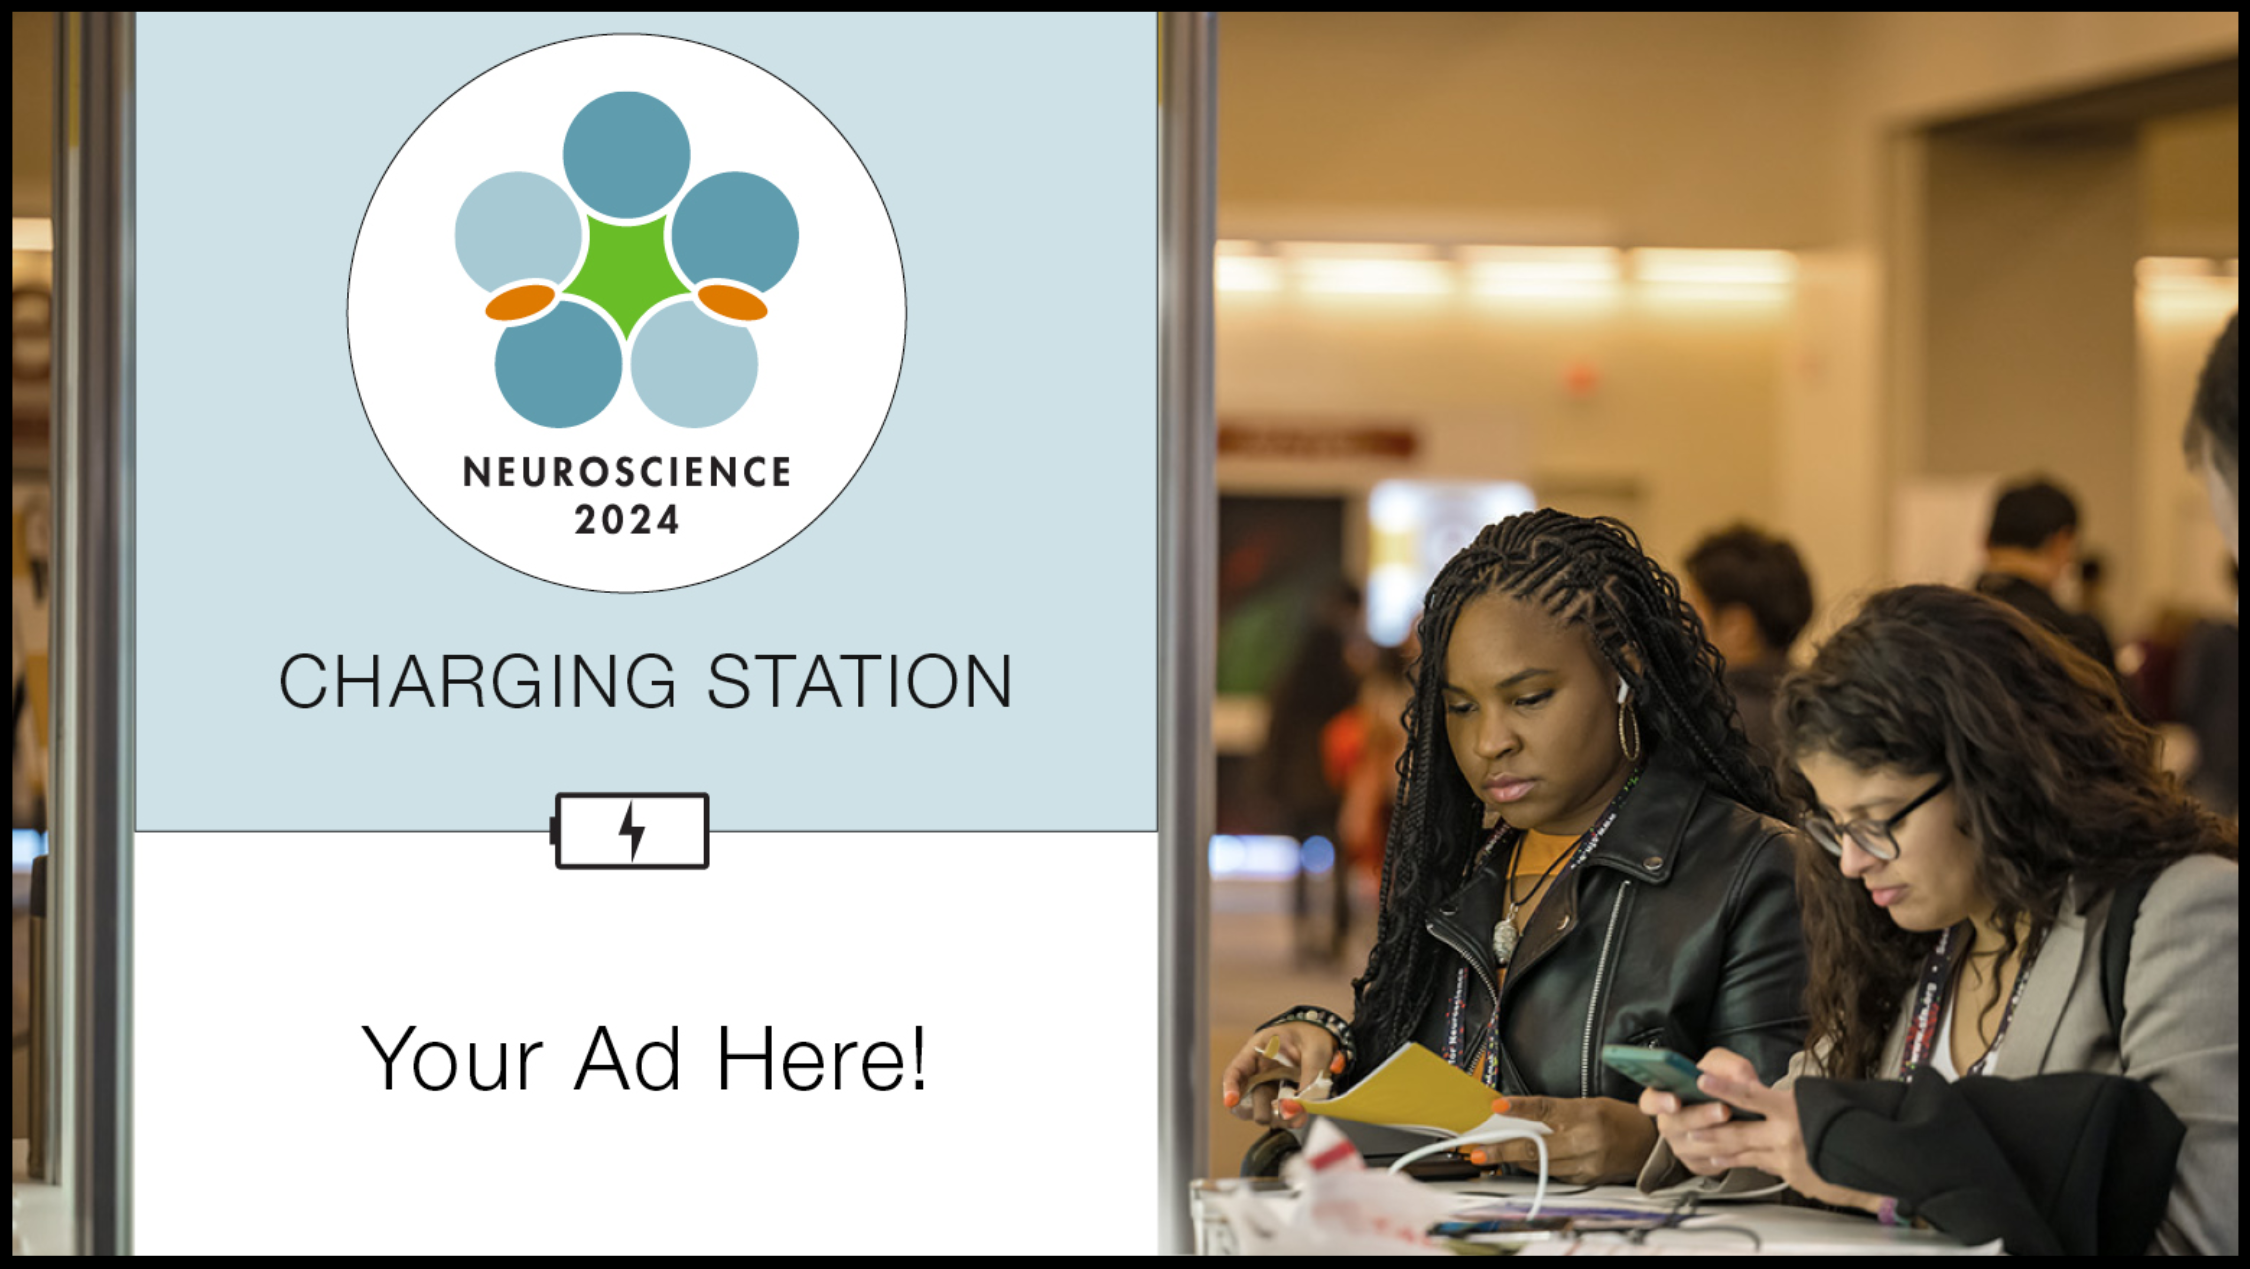 Example of Charging Station ad at Neuroscience 2024